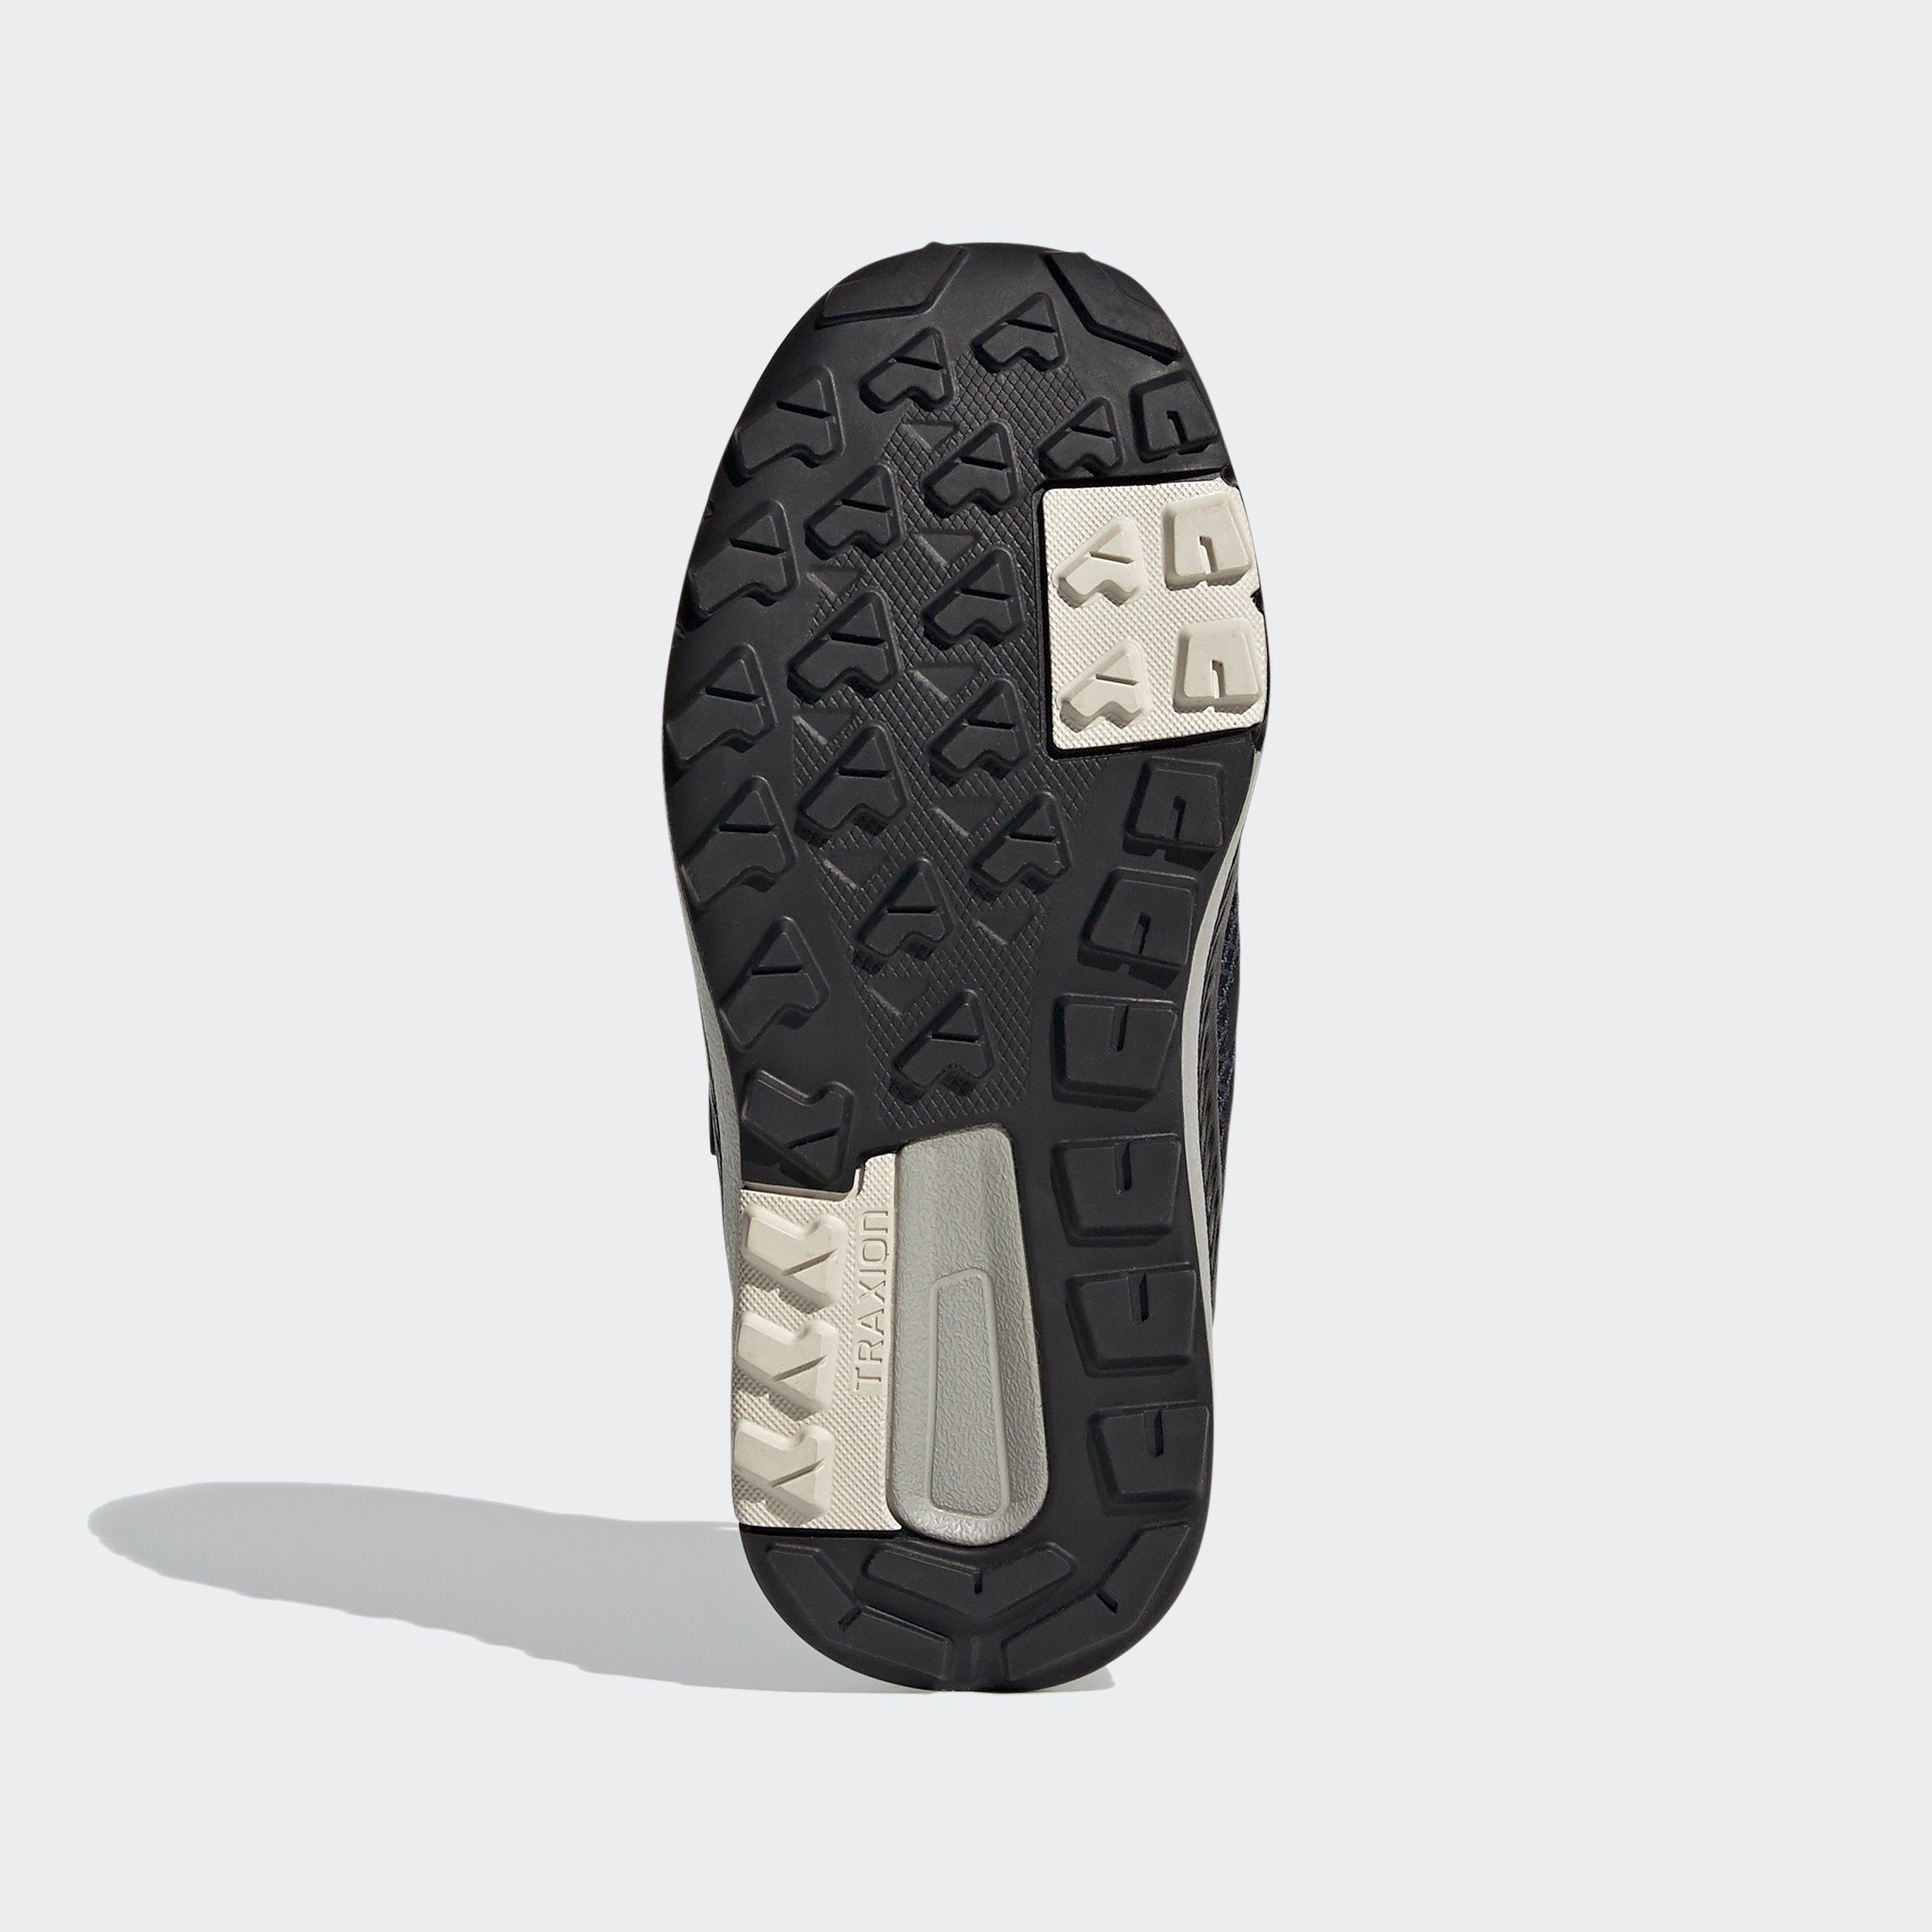 TERREX / TERREX / Five Aluminium TRAILMAKER Grey Black Core adidas Wanderschuh